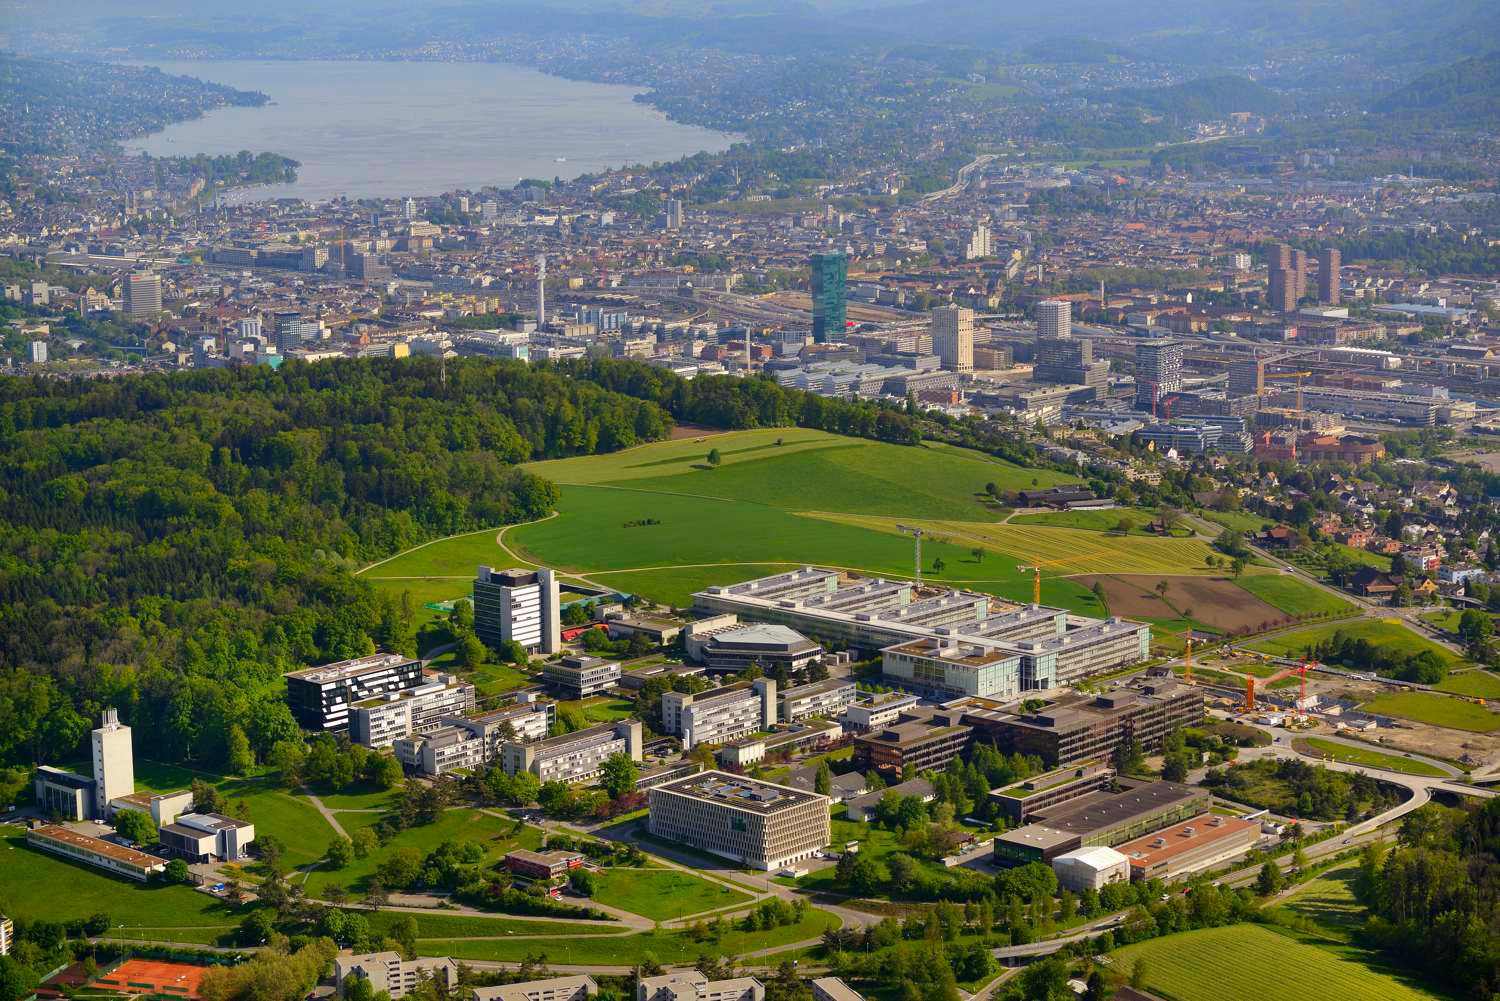 Enlarged view: ETH Campus Hönggerberg